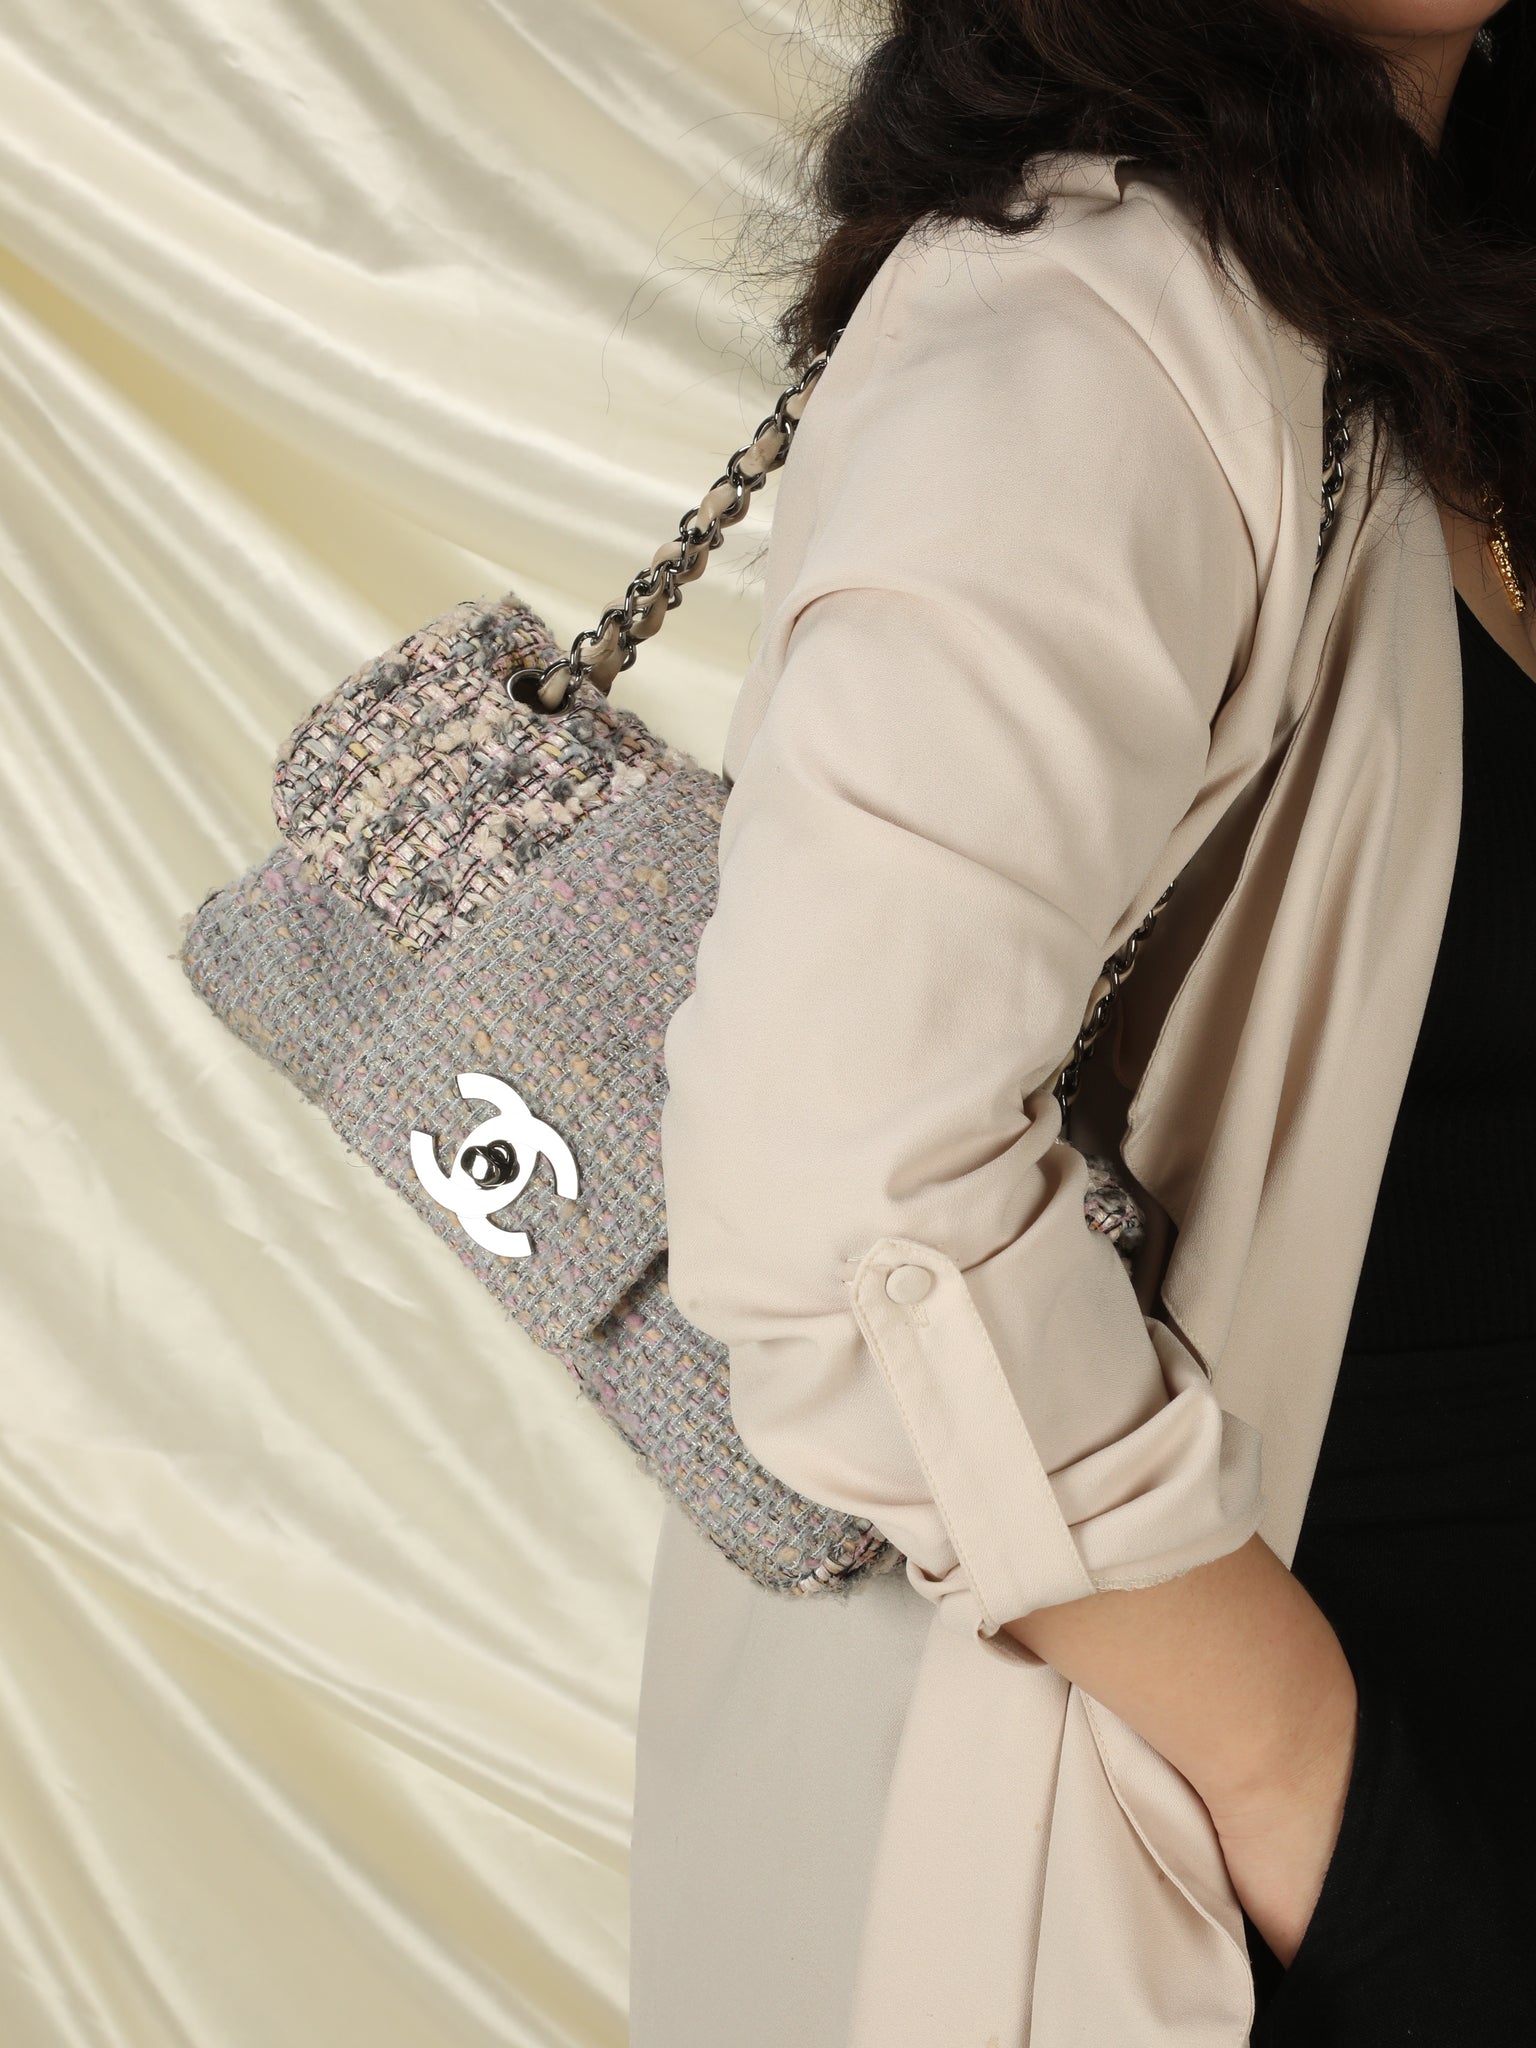 Chanel Tweed Fantasy Flap Bag